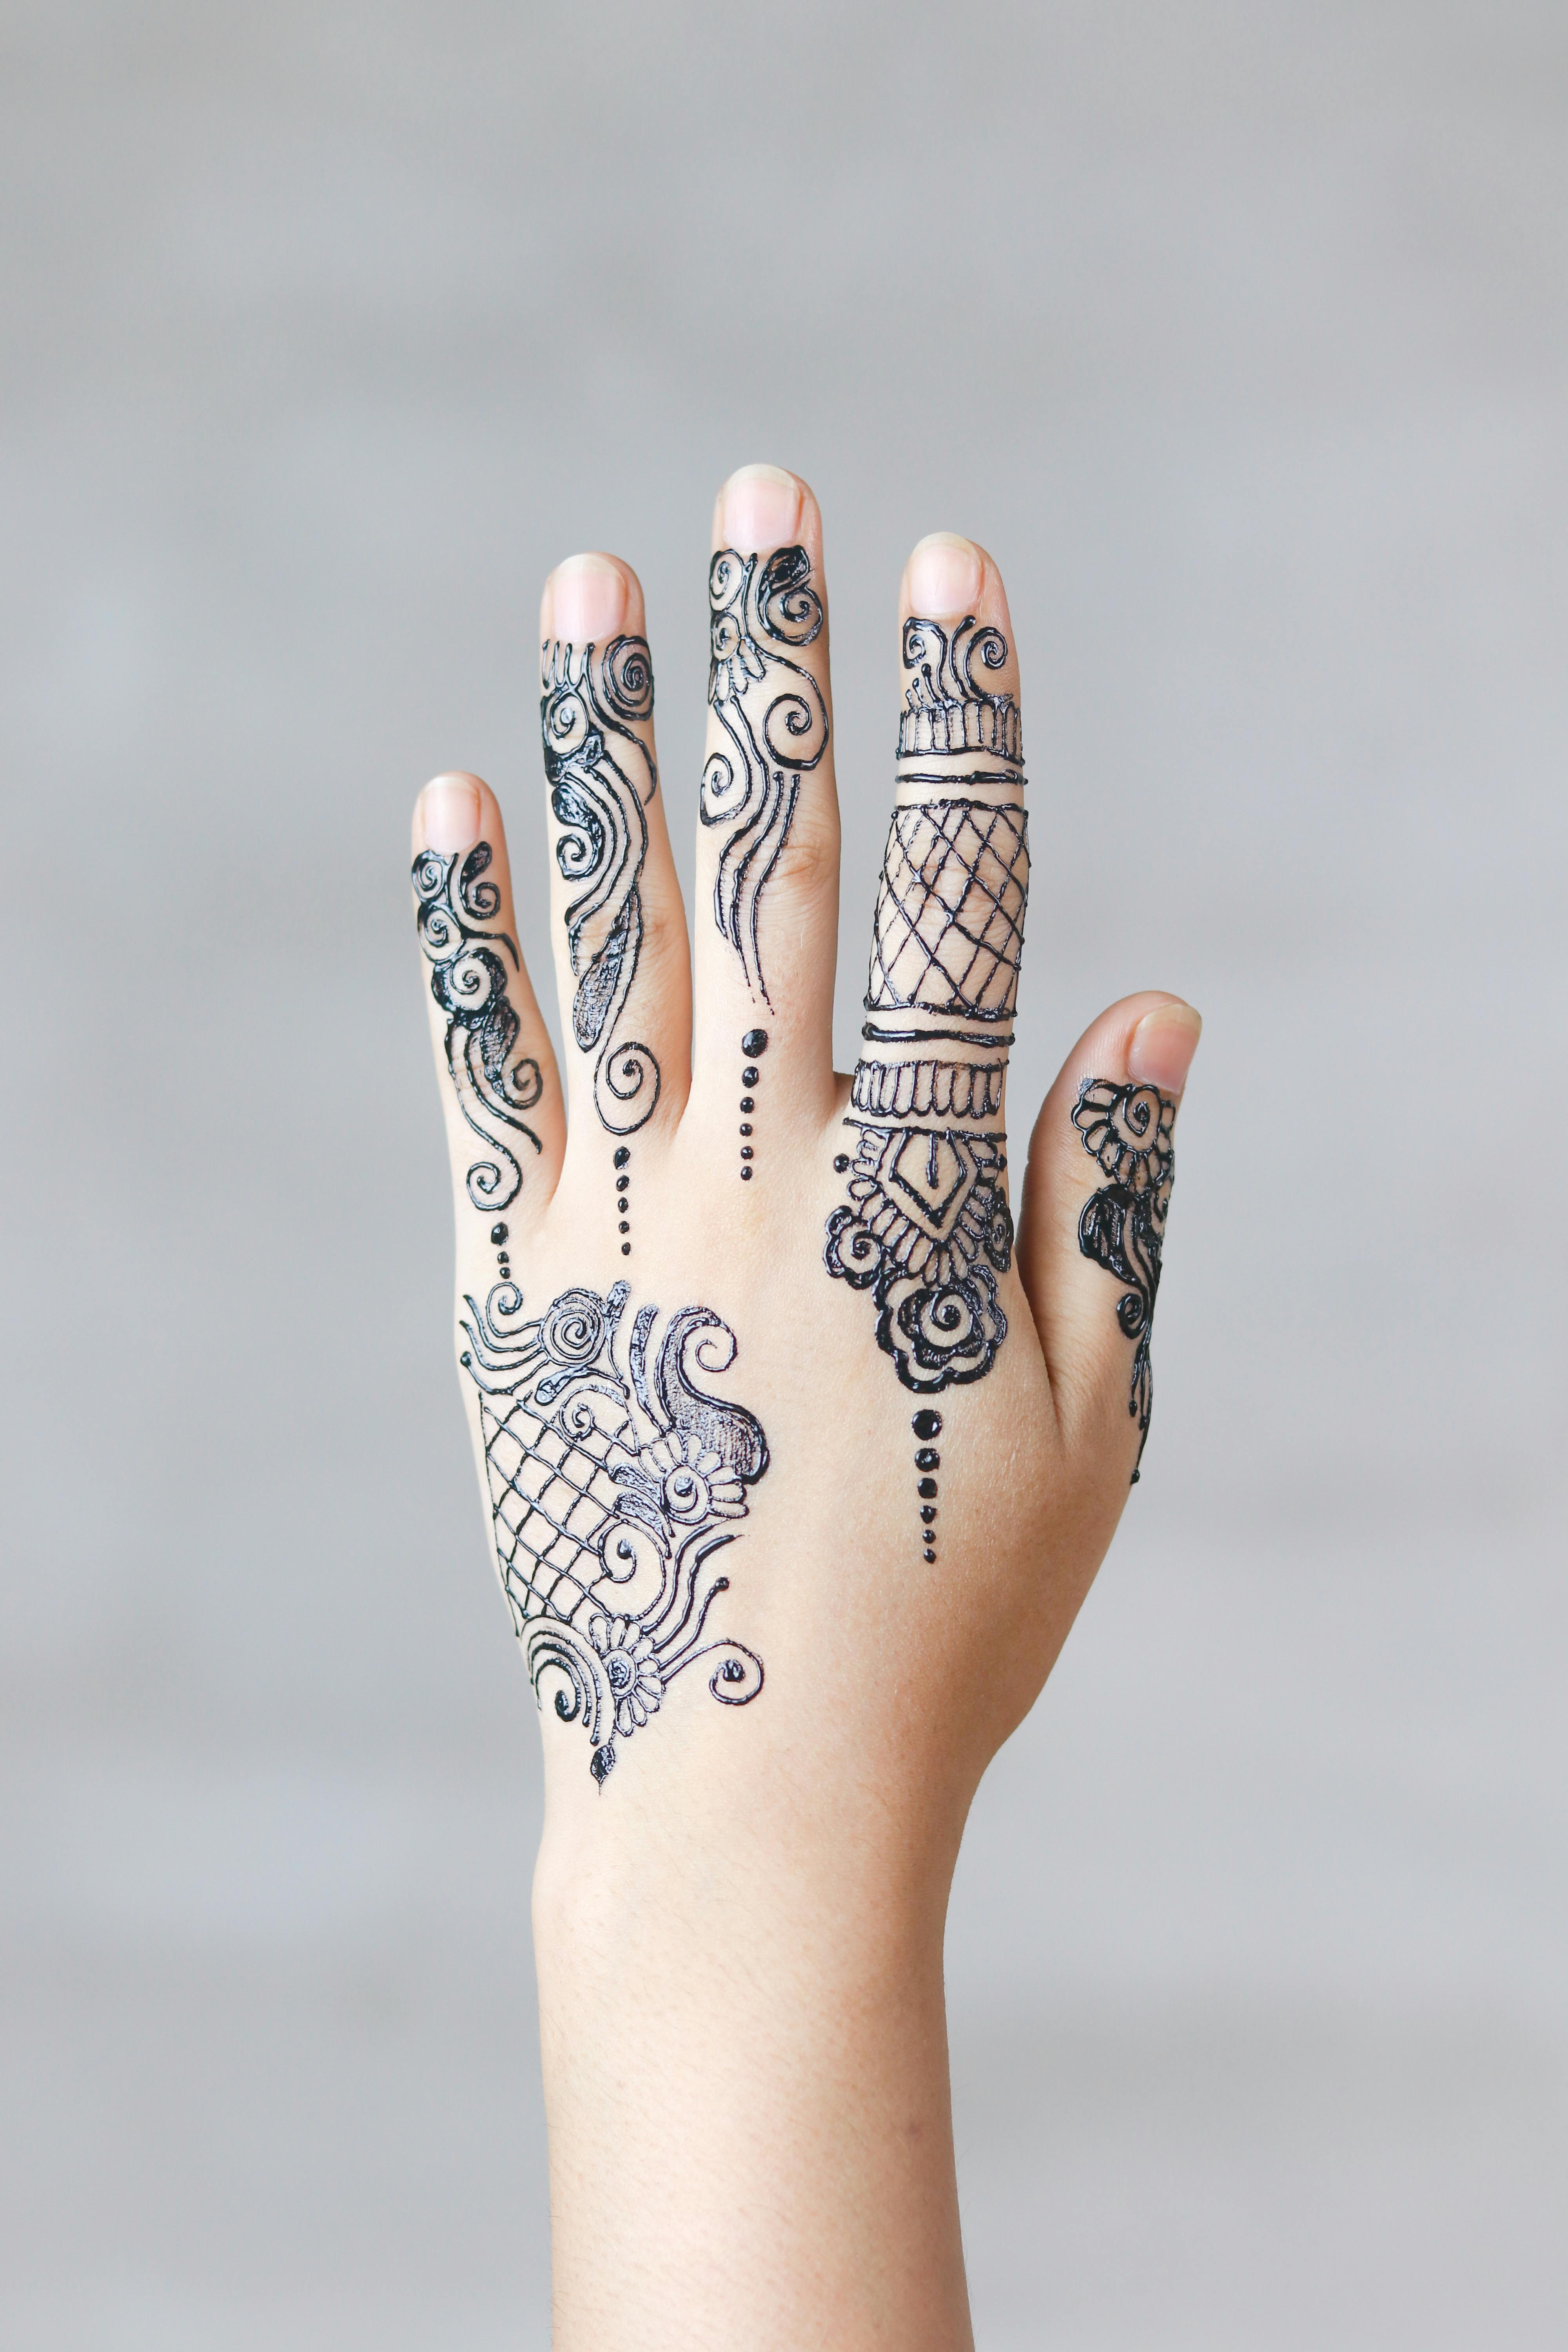 14,672 Henna Man Images, Stock Photos & Vectors | Shutterstock